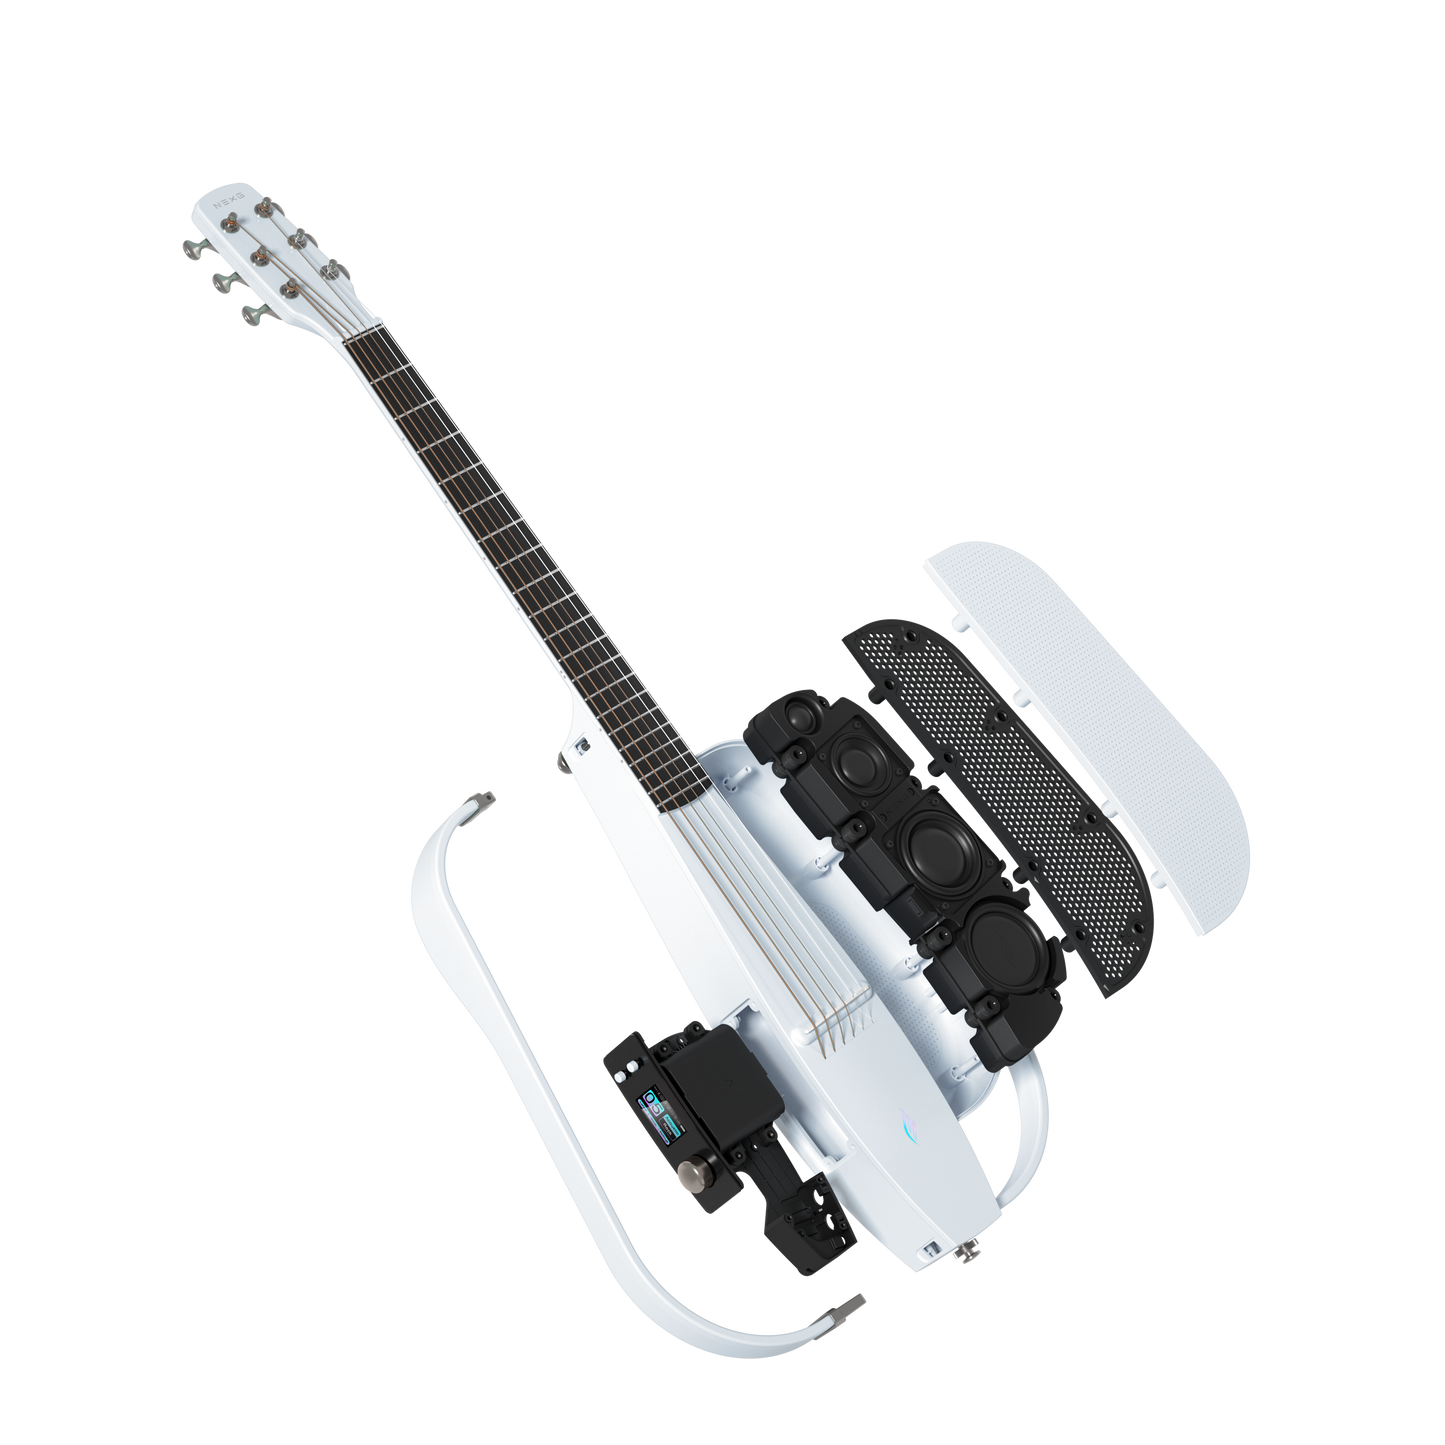 ENYA NEXG 2 Carbon Fiber Guitar White (Basic)